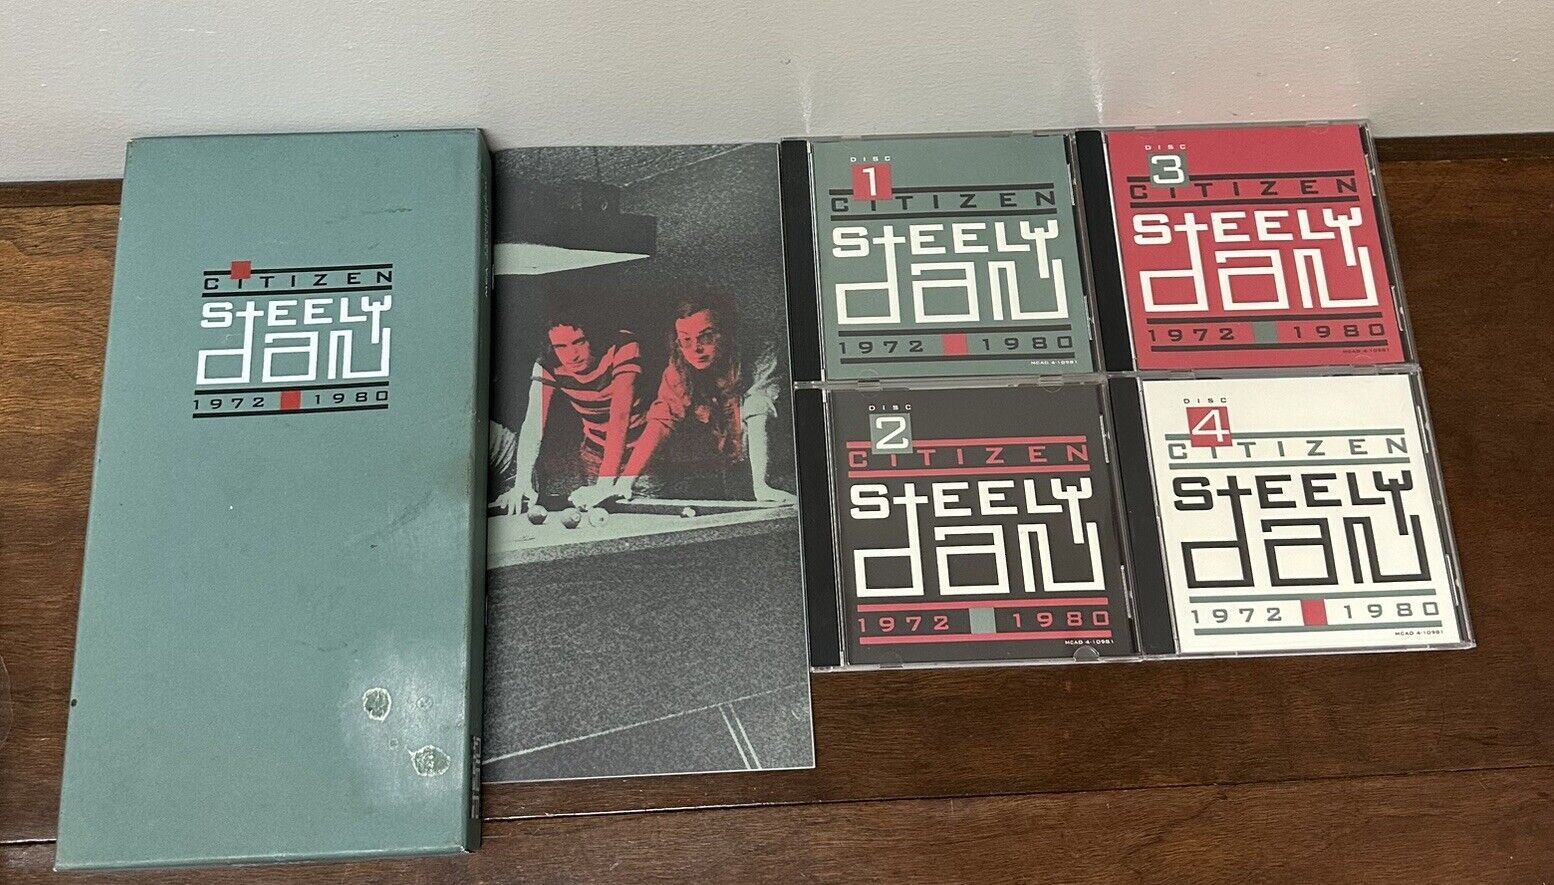 Citizen Steely Dan: 1972-1980 Box Set (CD, 1993) Complete Fair Condition